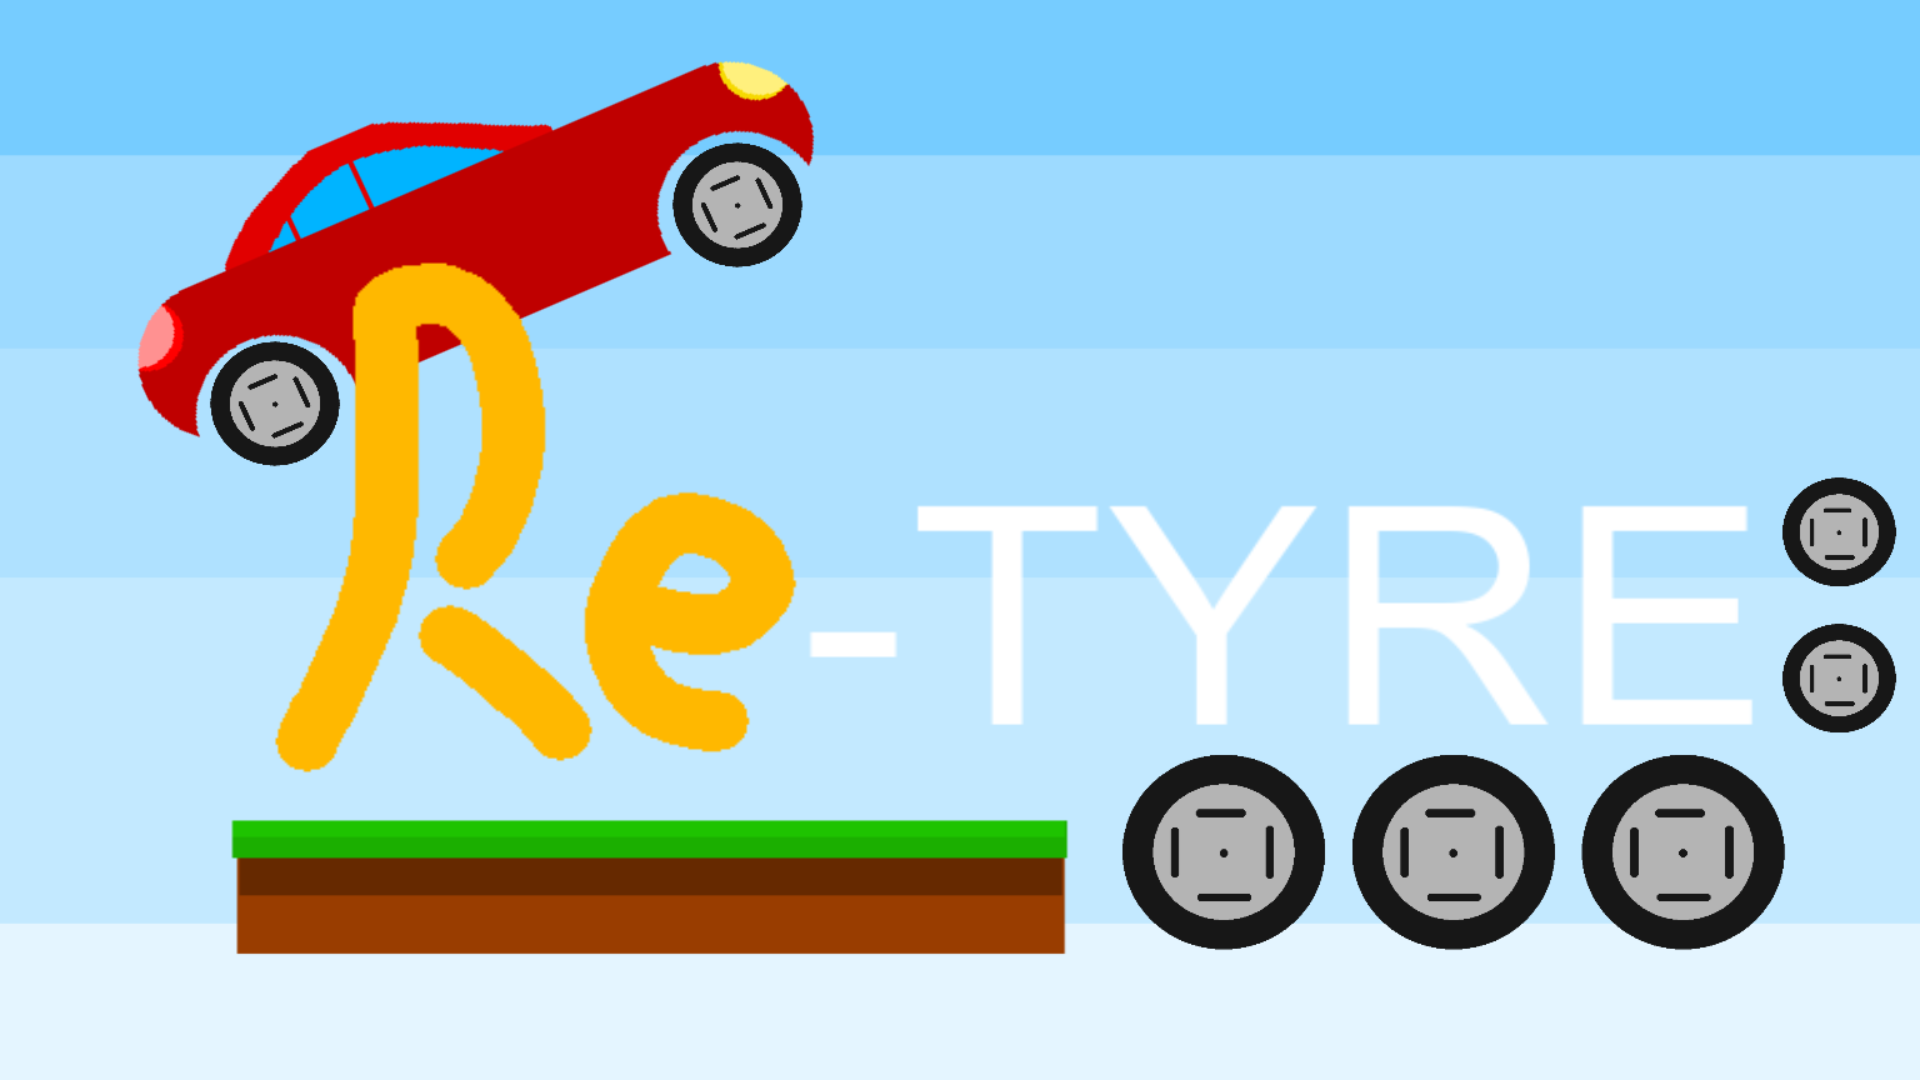 Re-Tyre